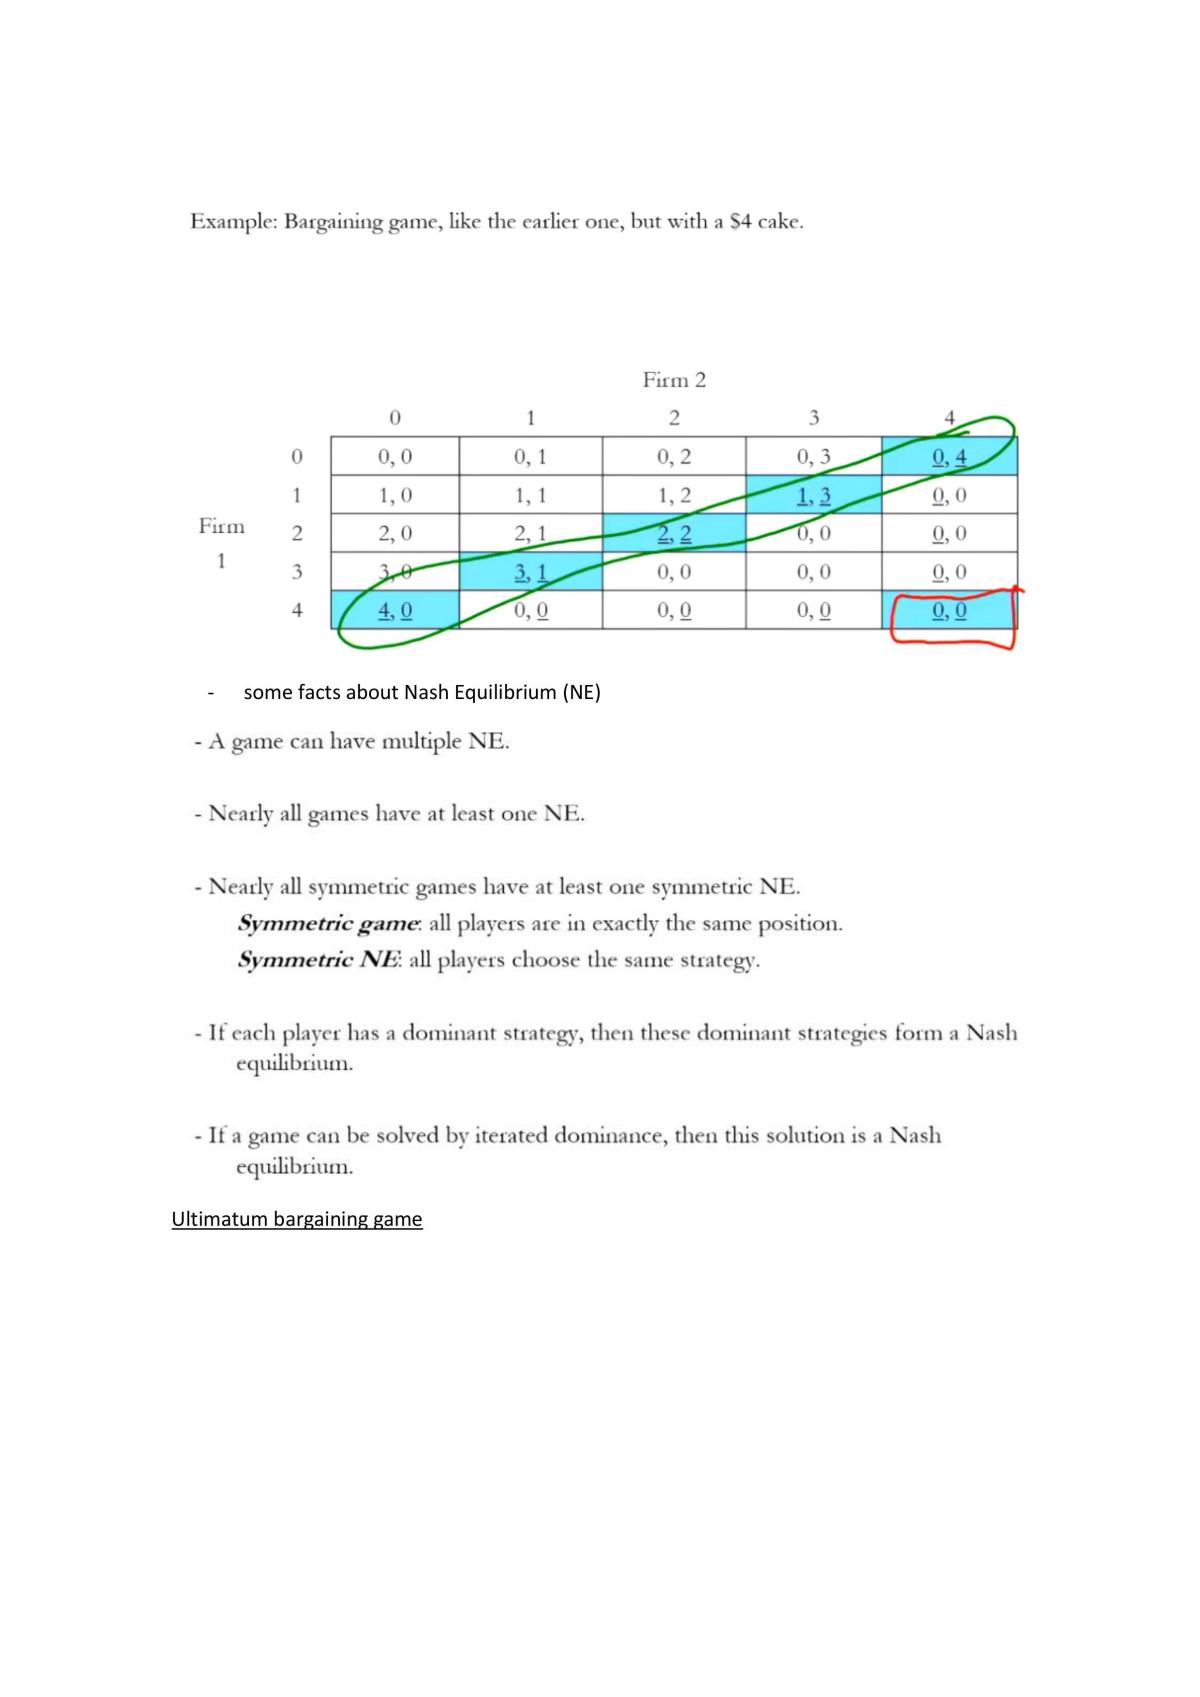 Intermediate microeconomics - exam notes - Page 109